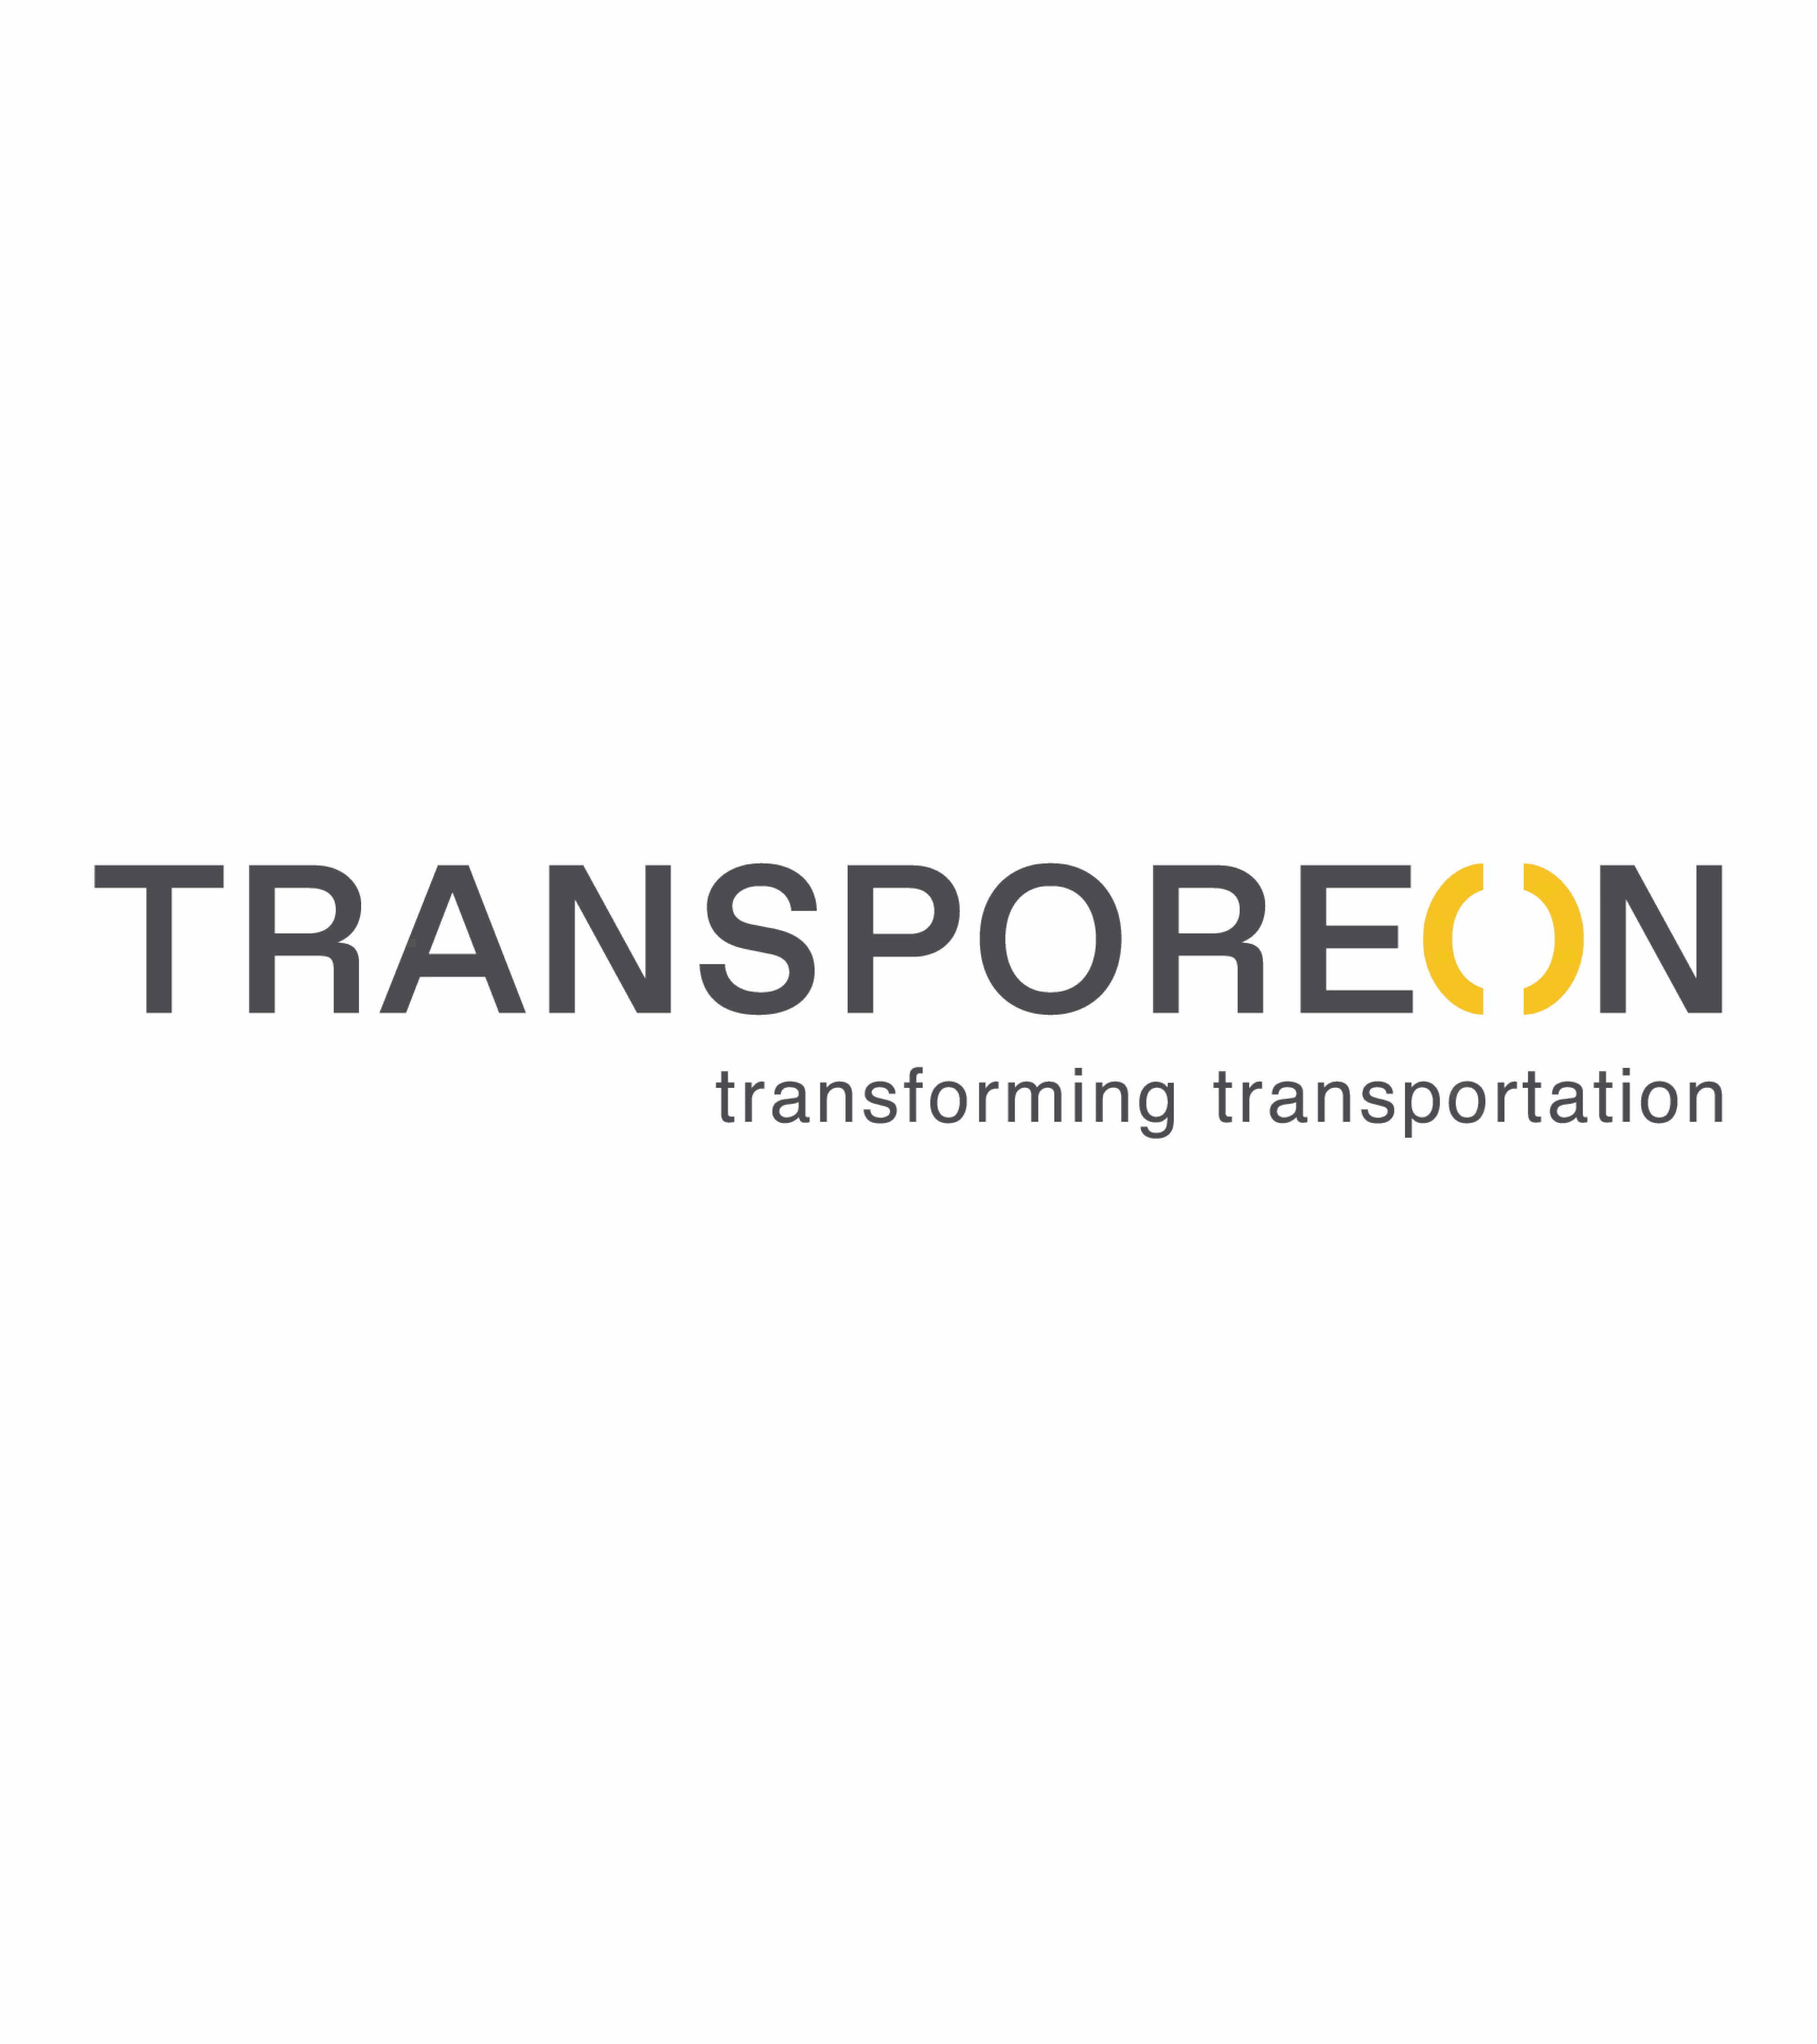 Transporeon Logo